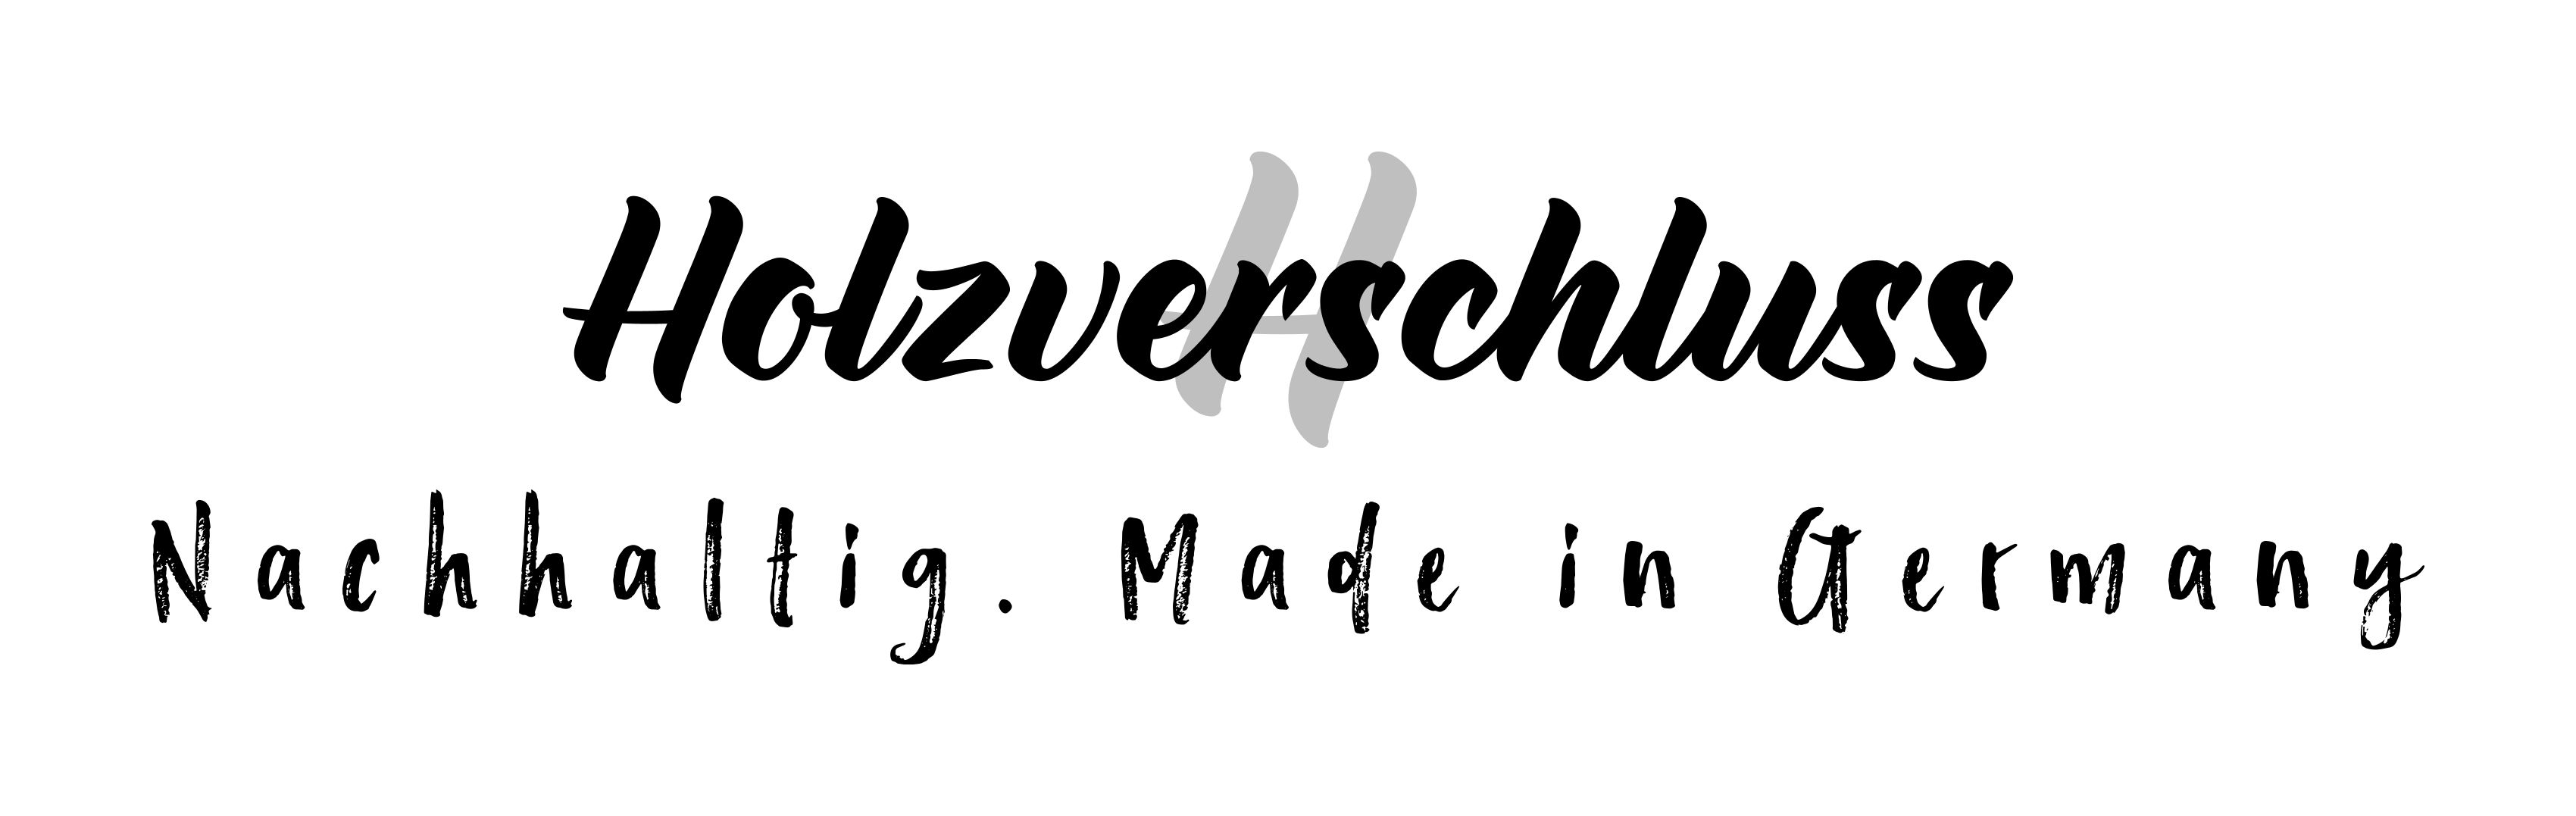 Holzverschluss Logo